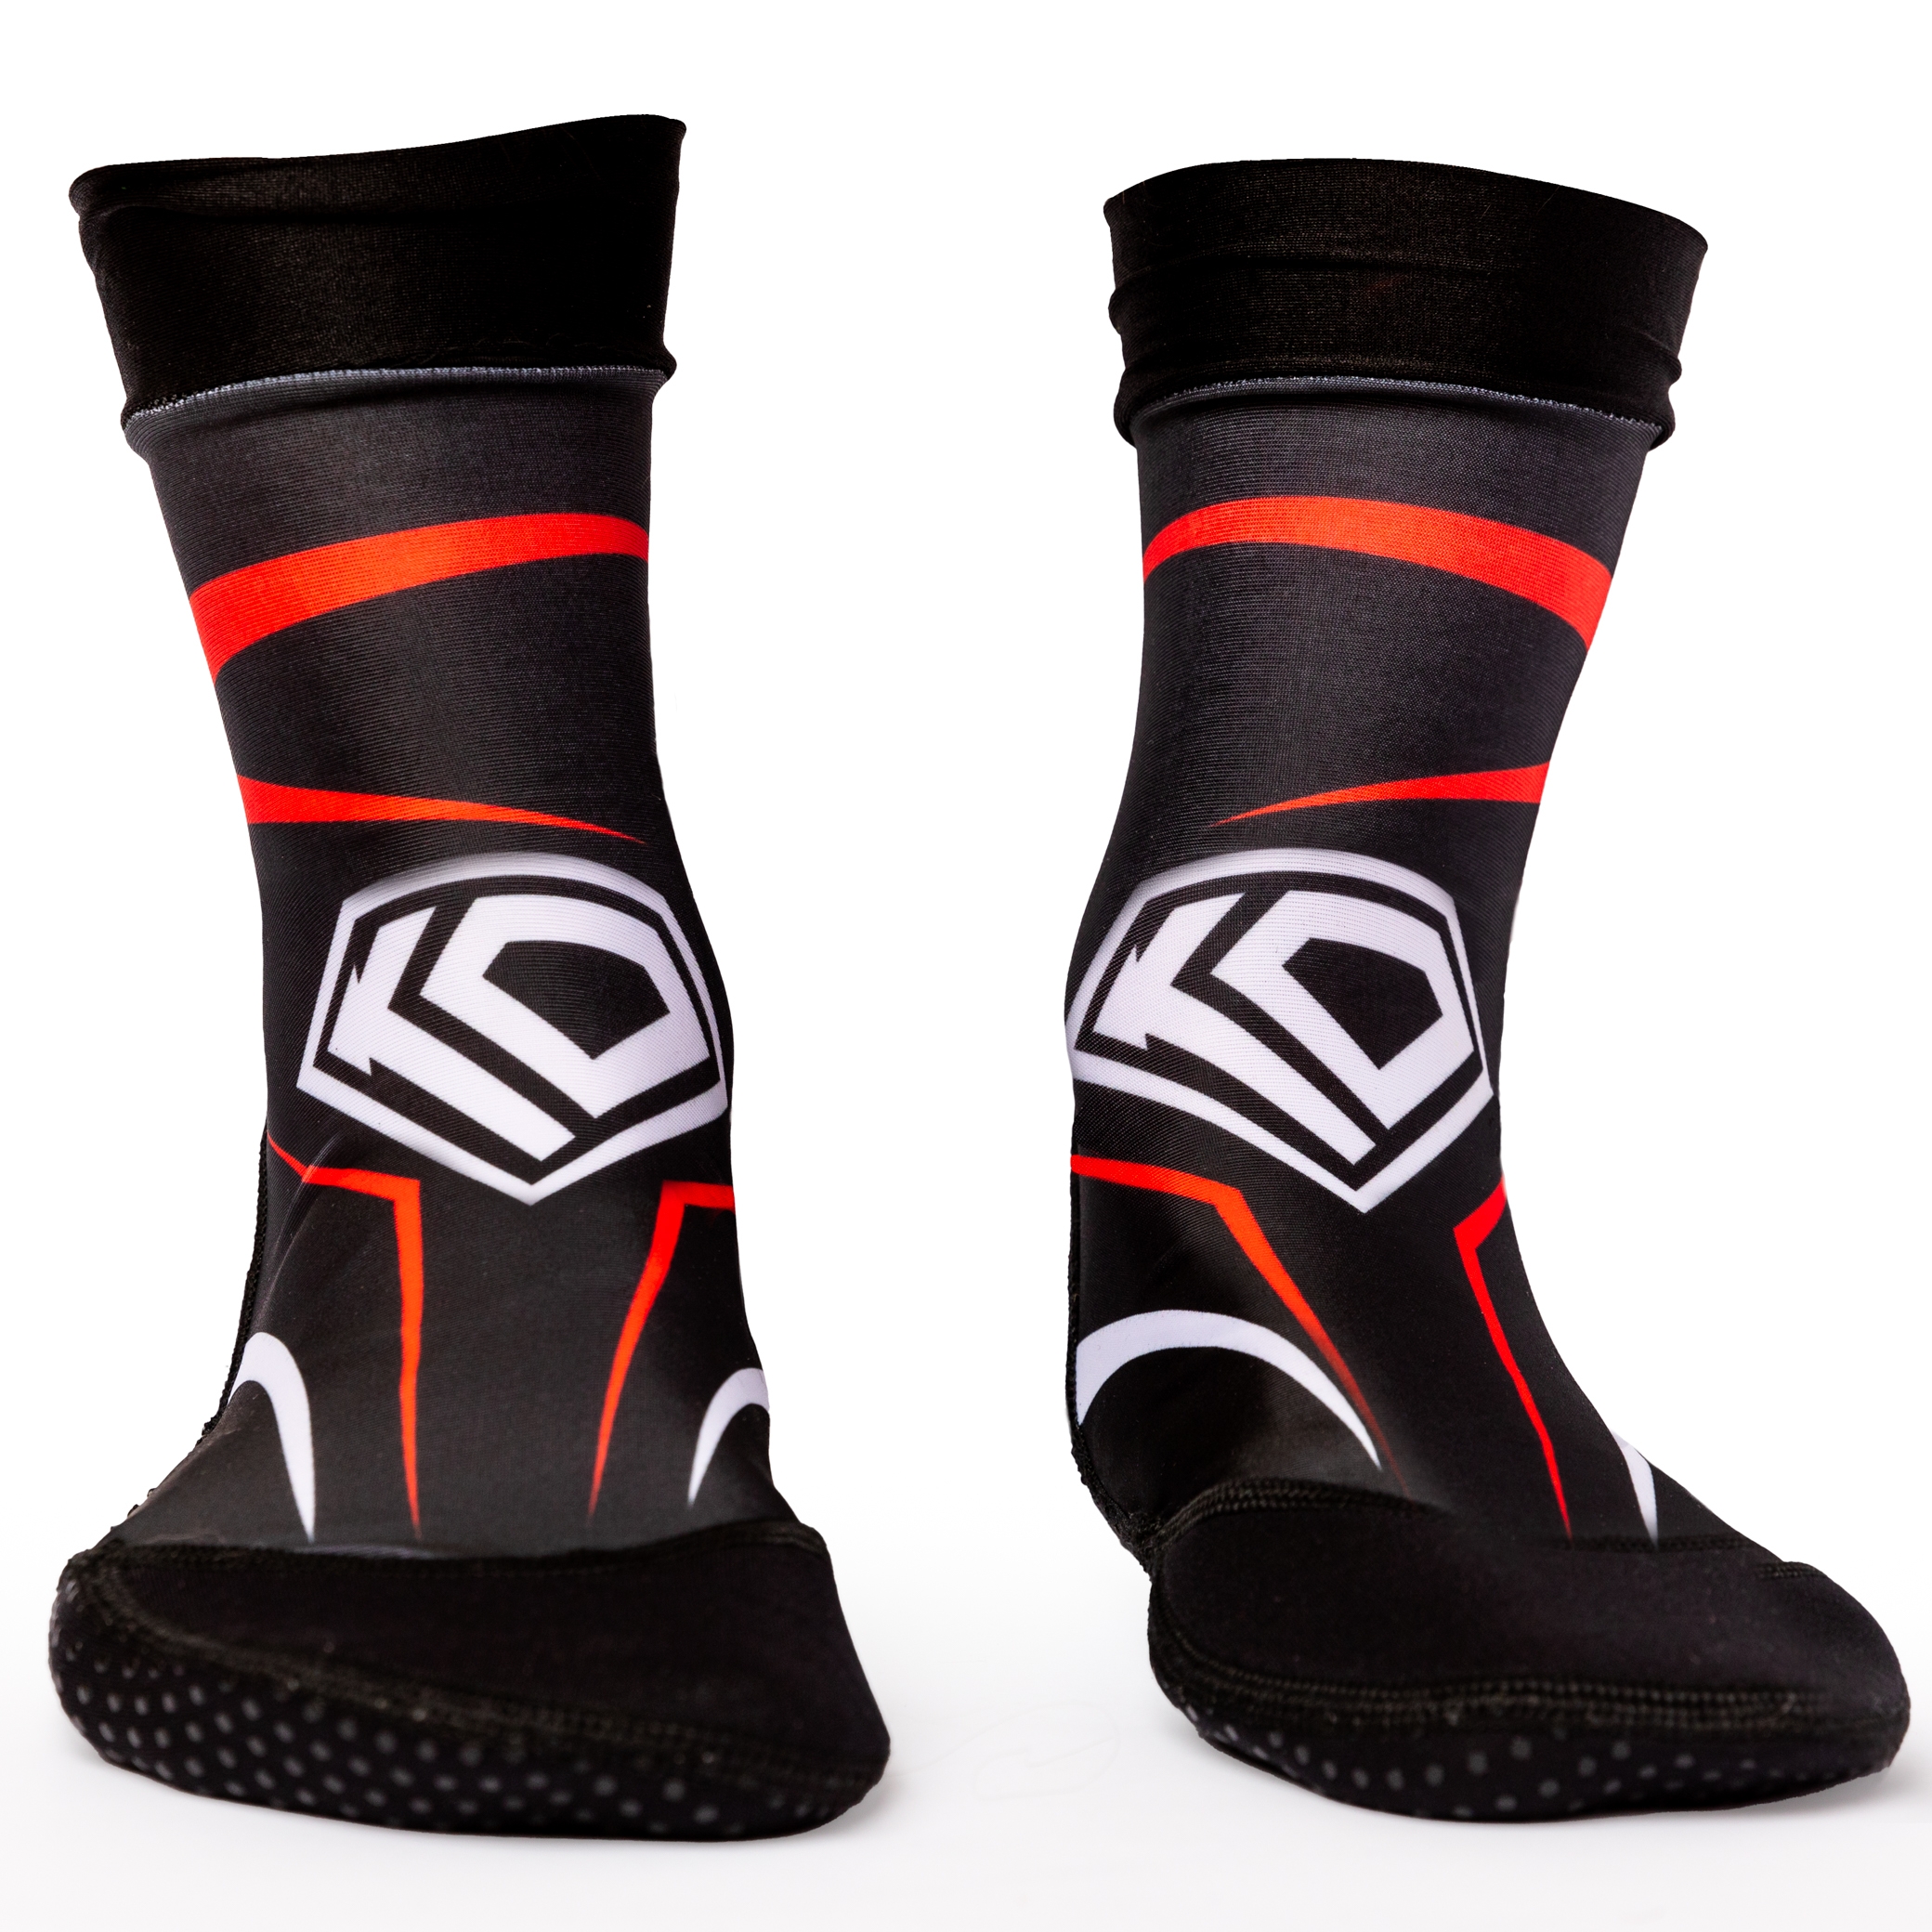 Unisex Grip Socks for Jiu Jitsu, MMA, Karate, Wrestling, Beach by KO Sports  Gear - KO Sports Gear